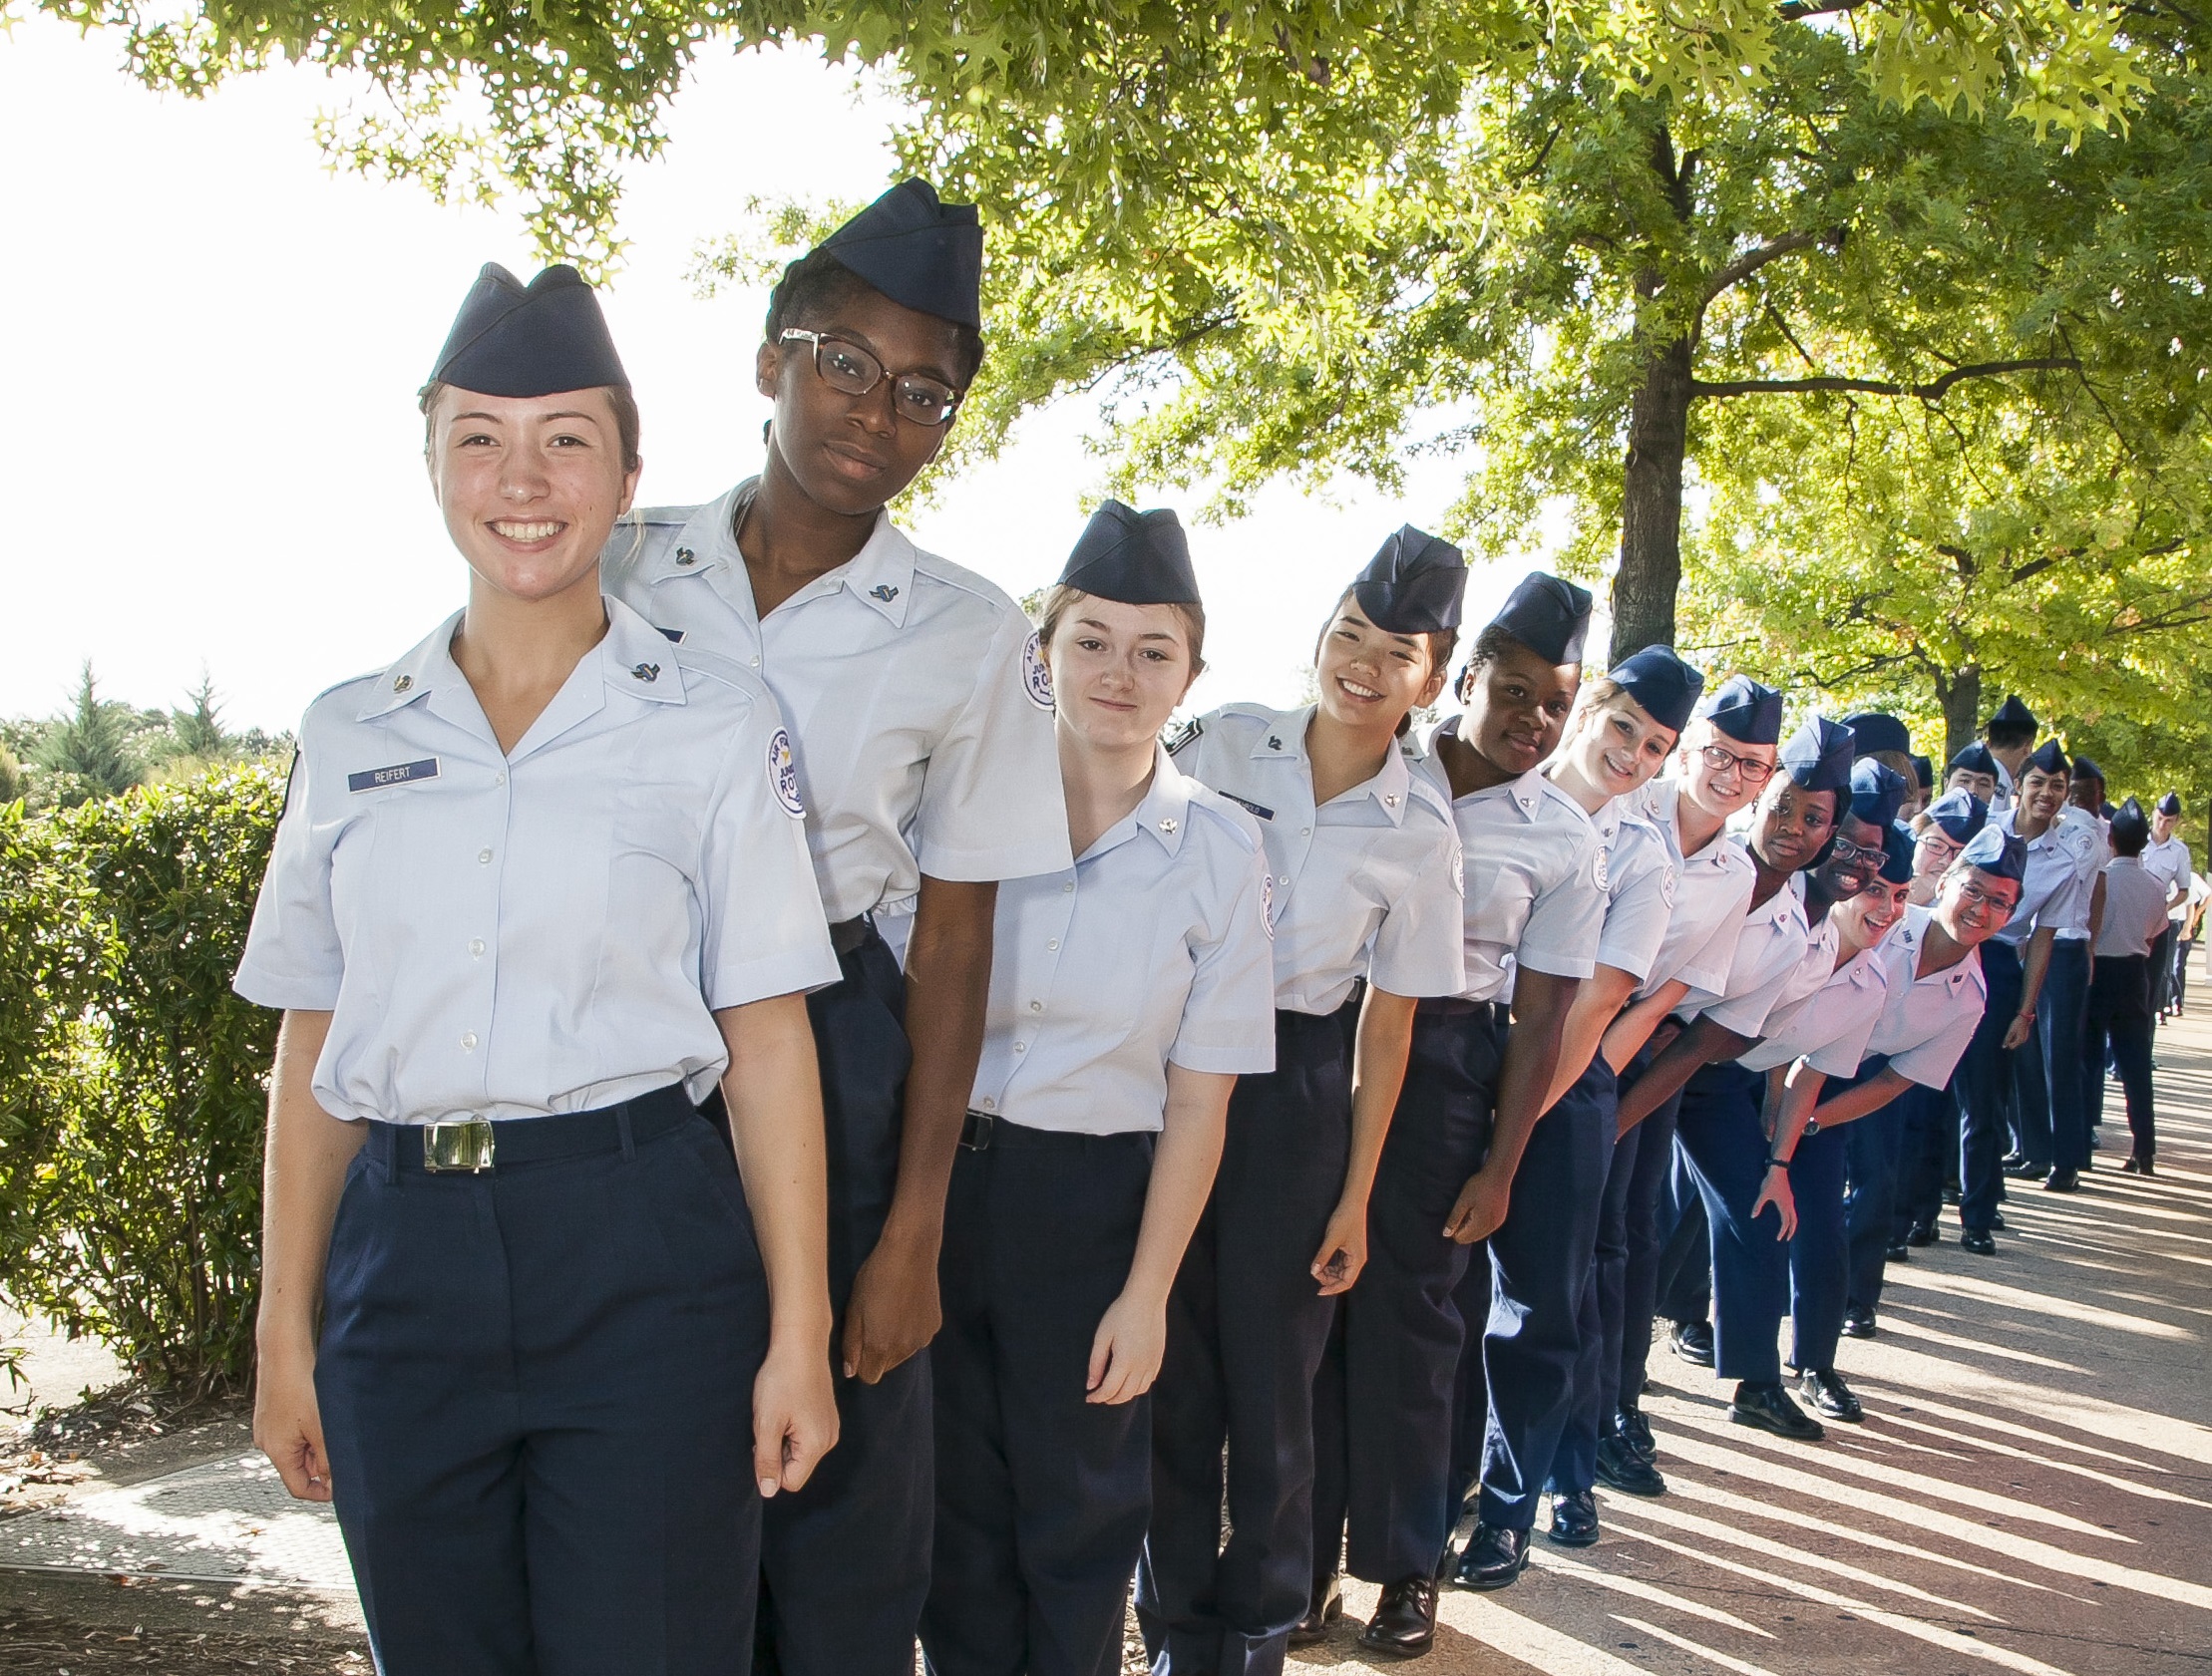 Randolph-Macon Academy: Empowering young women through positions of leadership